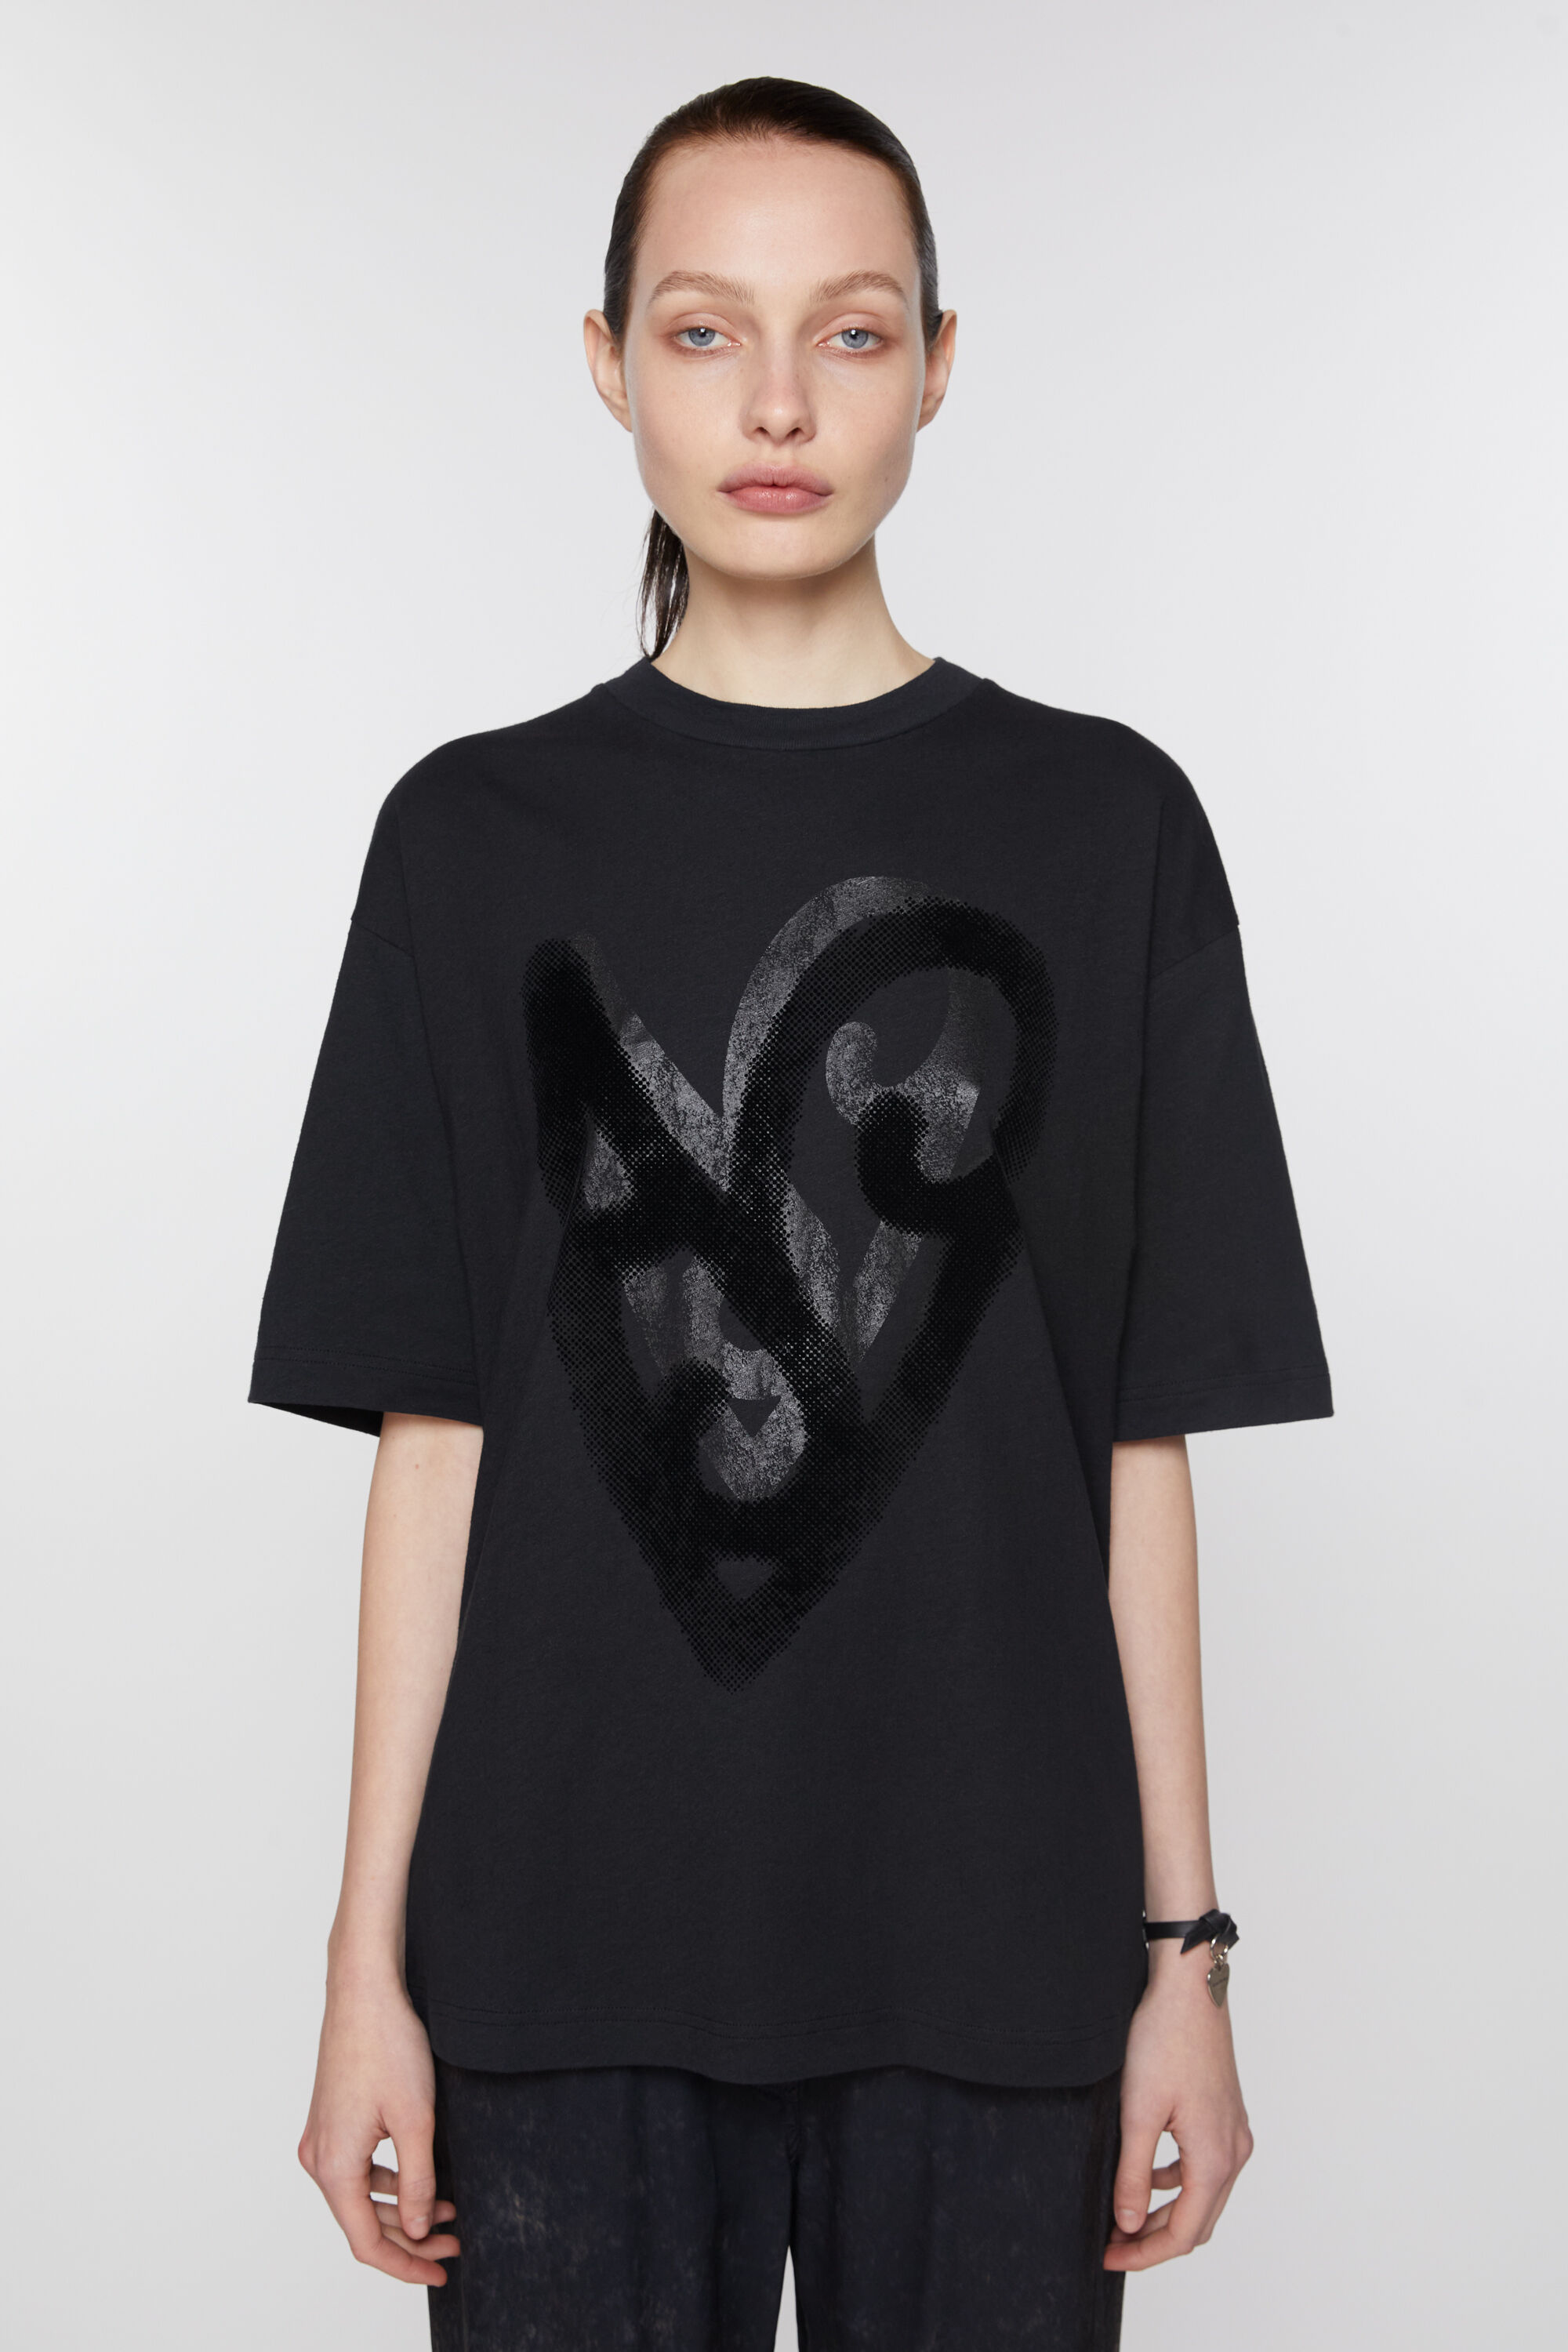 Acne Studios – Women's T-shirts